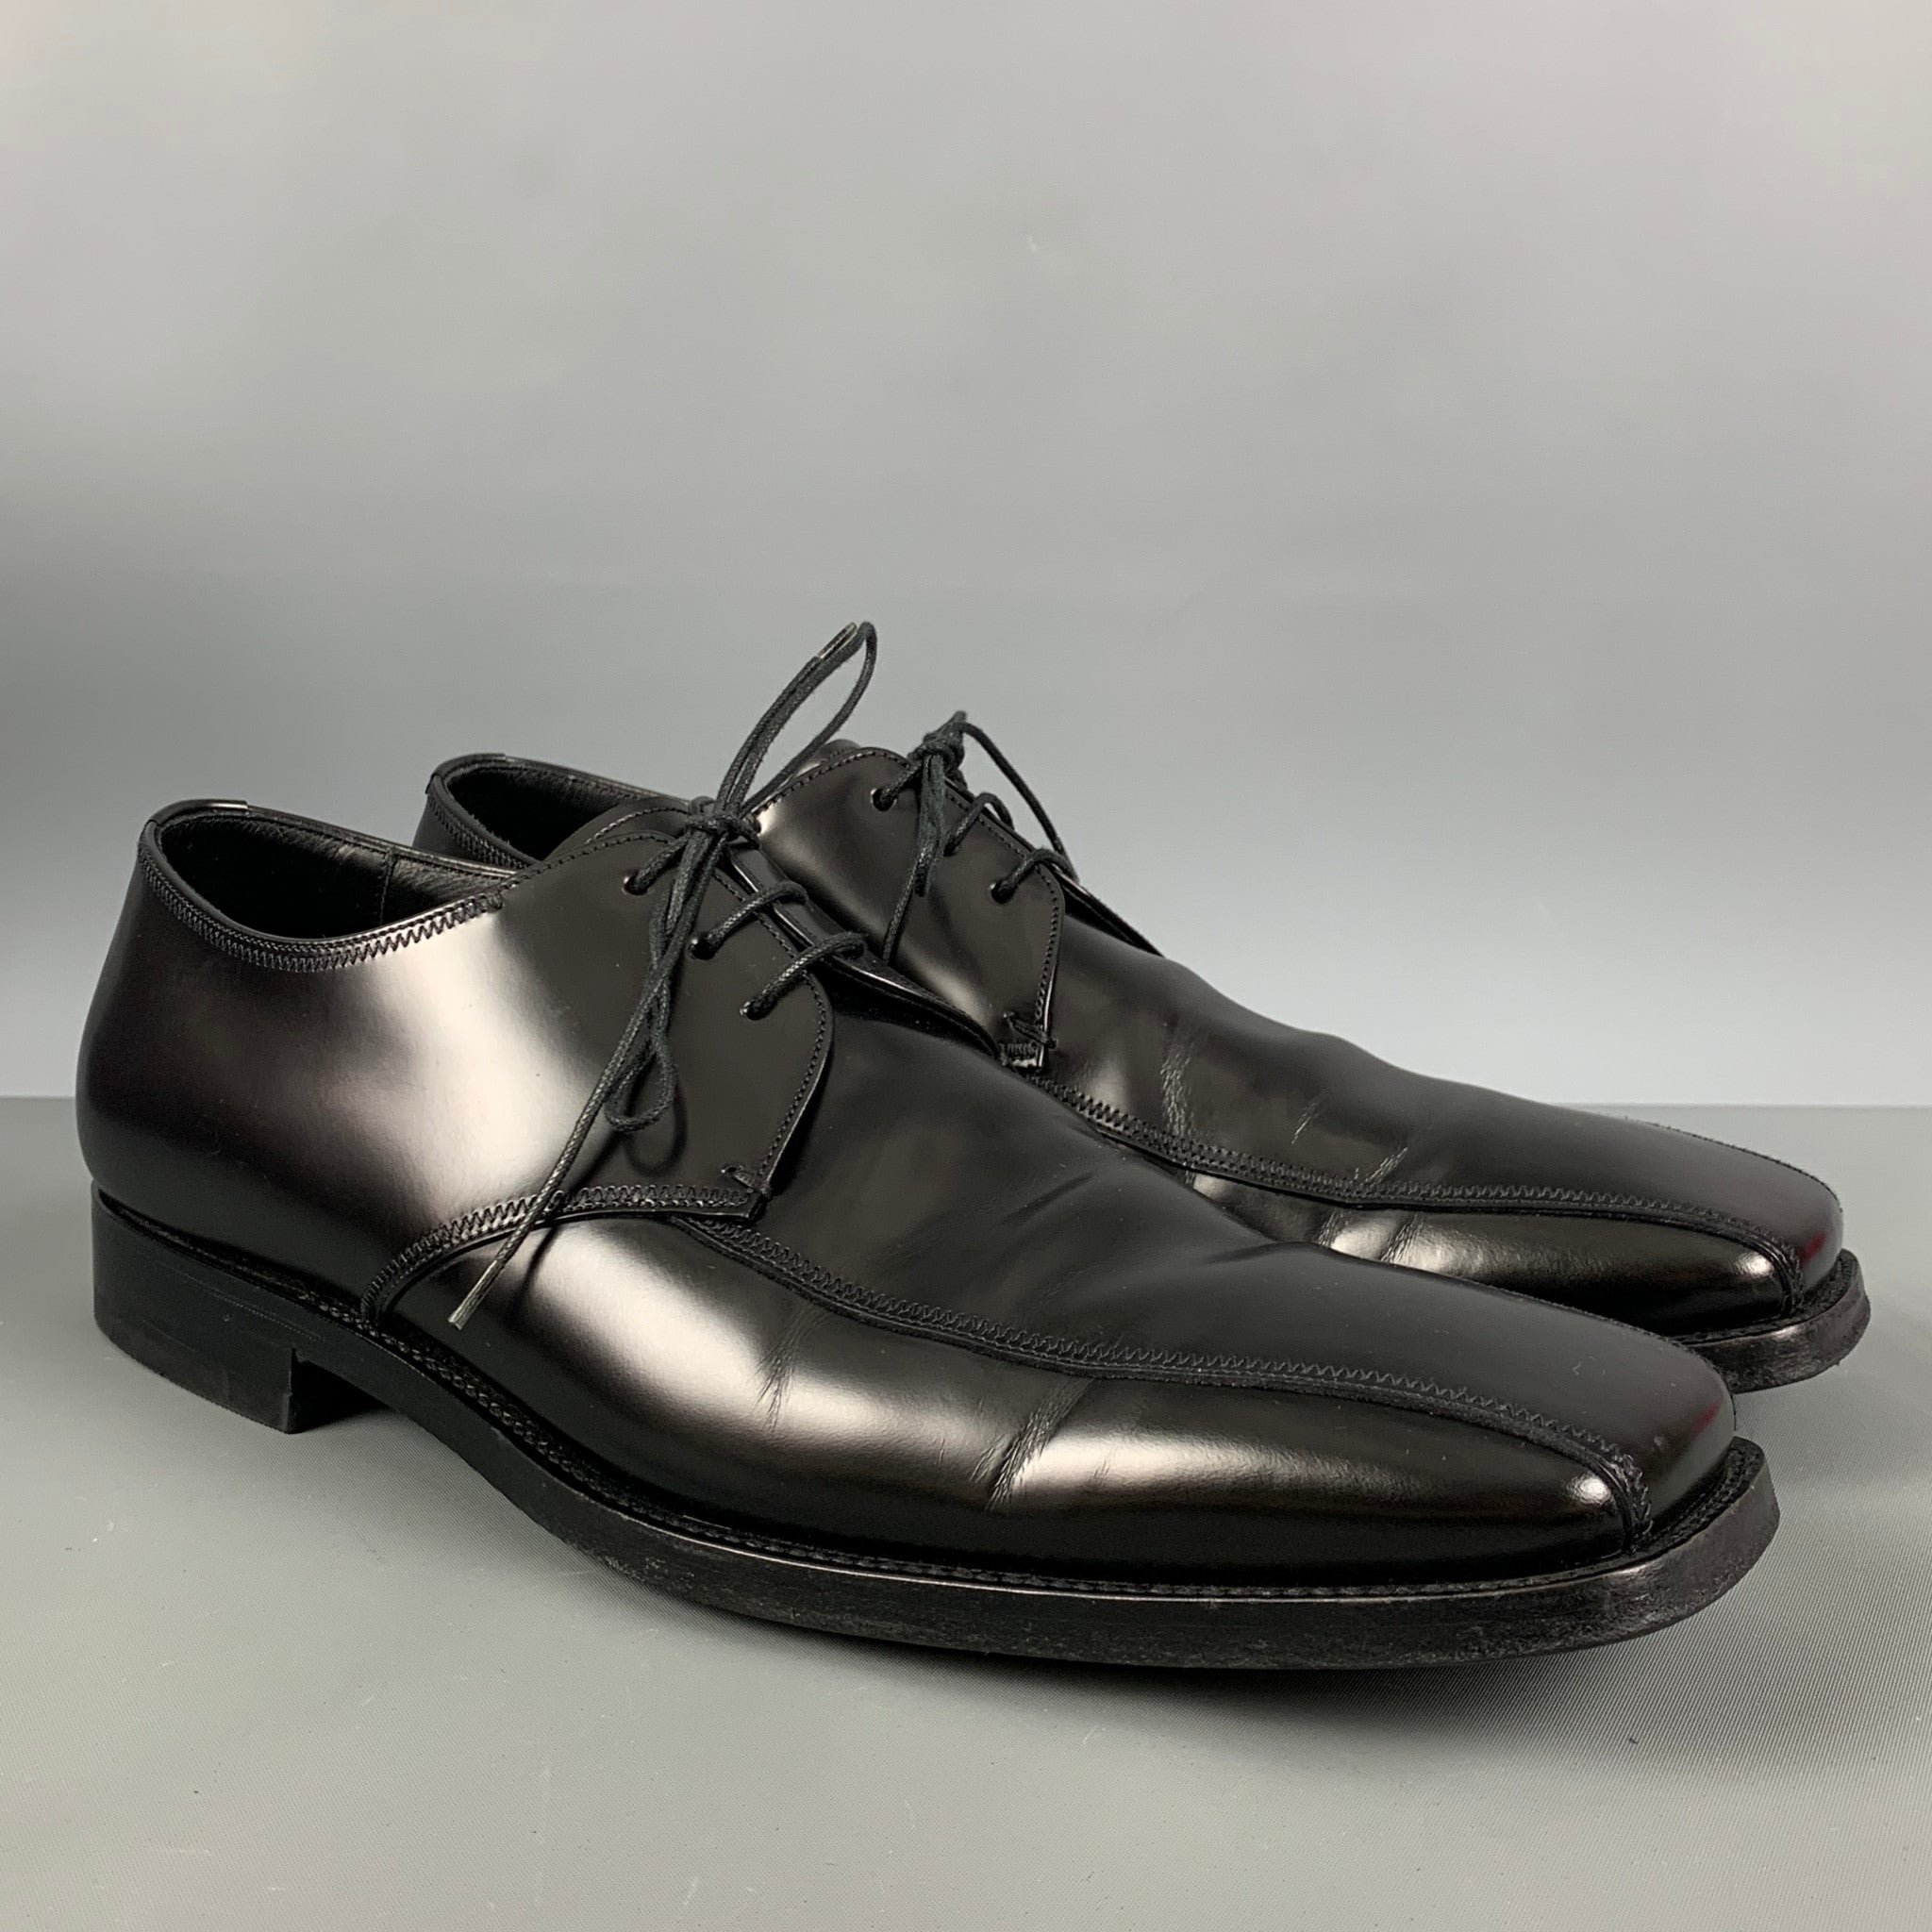 Louis Vuitton - Authenticated Flat - Patent Leather Black Plain for Men, Very Good Condition